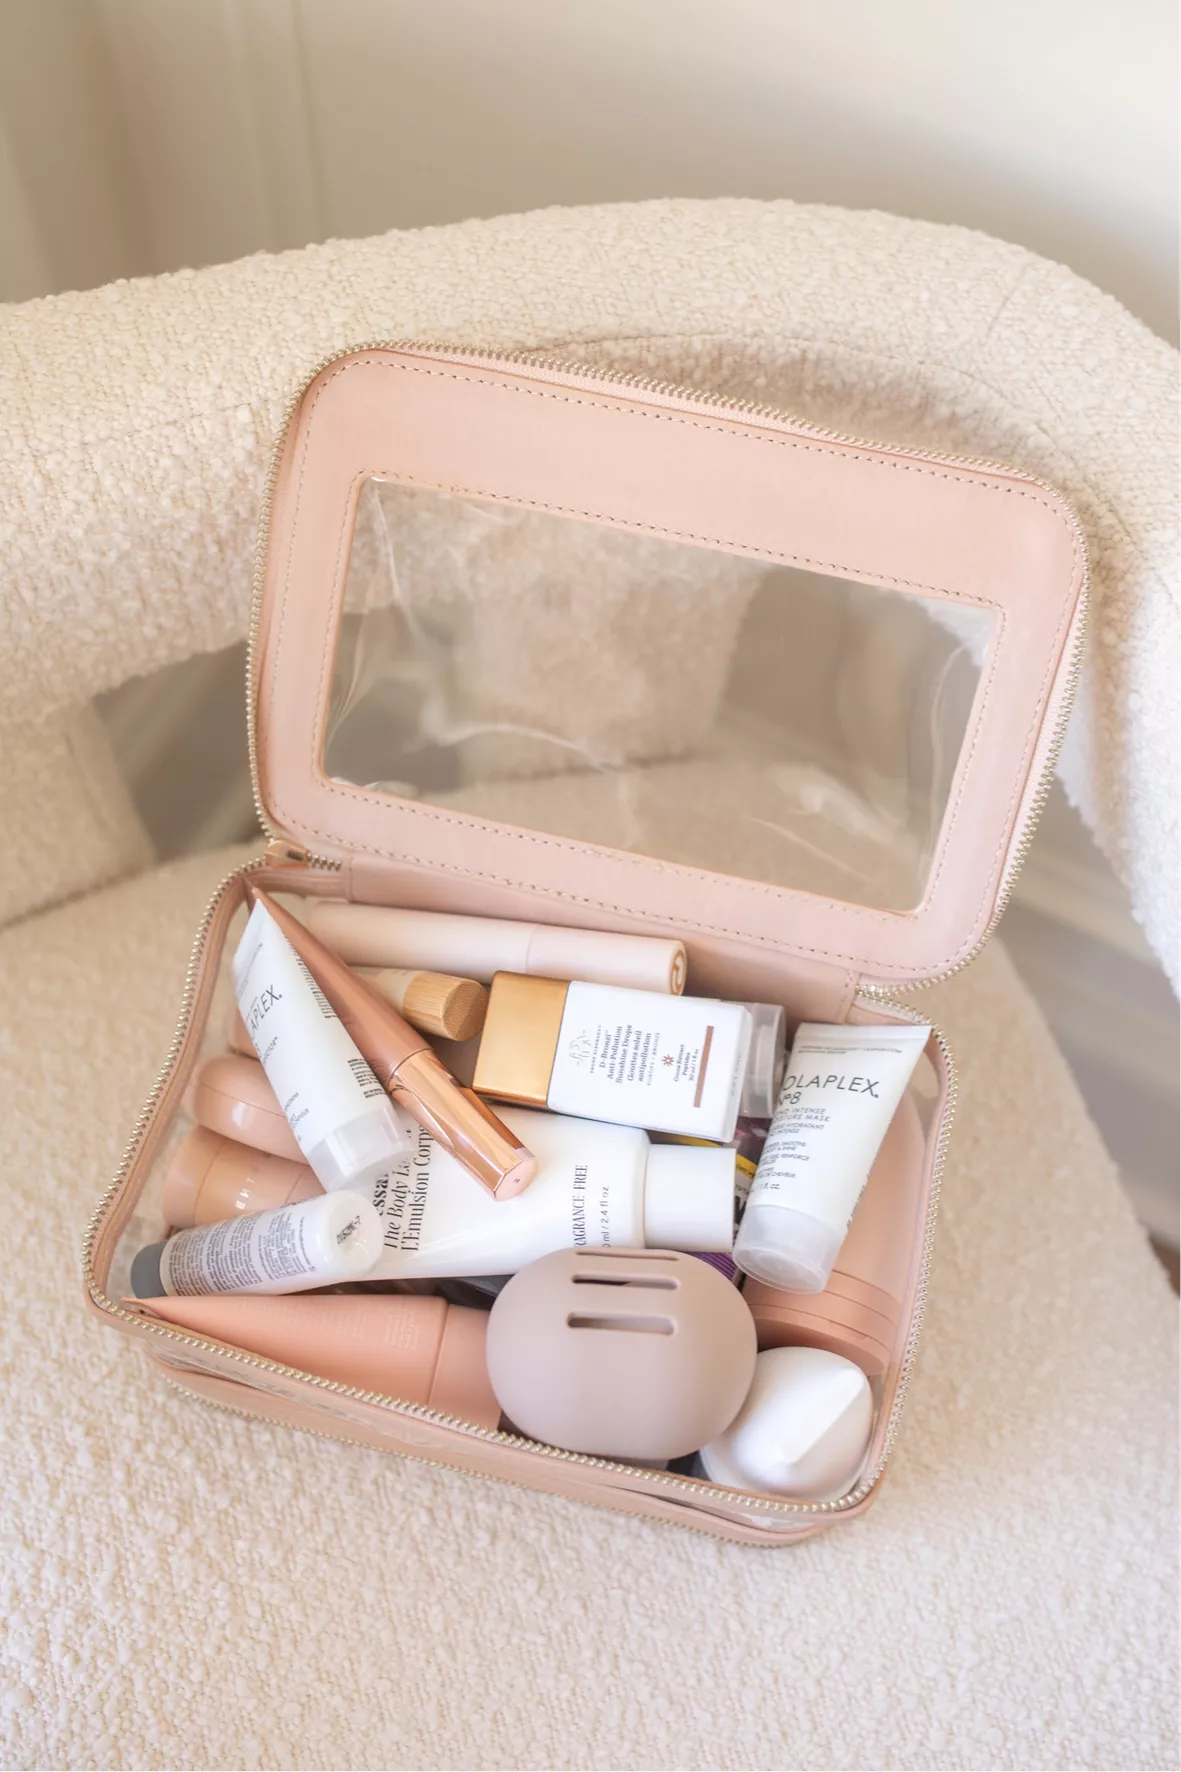  Aveniee Clear Makeup Bag Organizer, Portable Travel